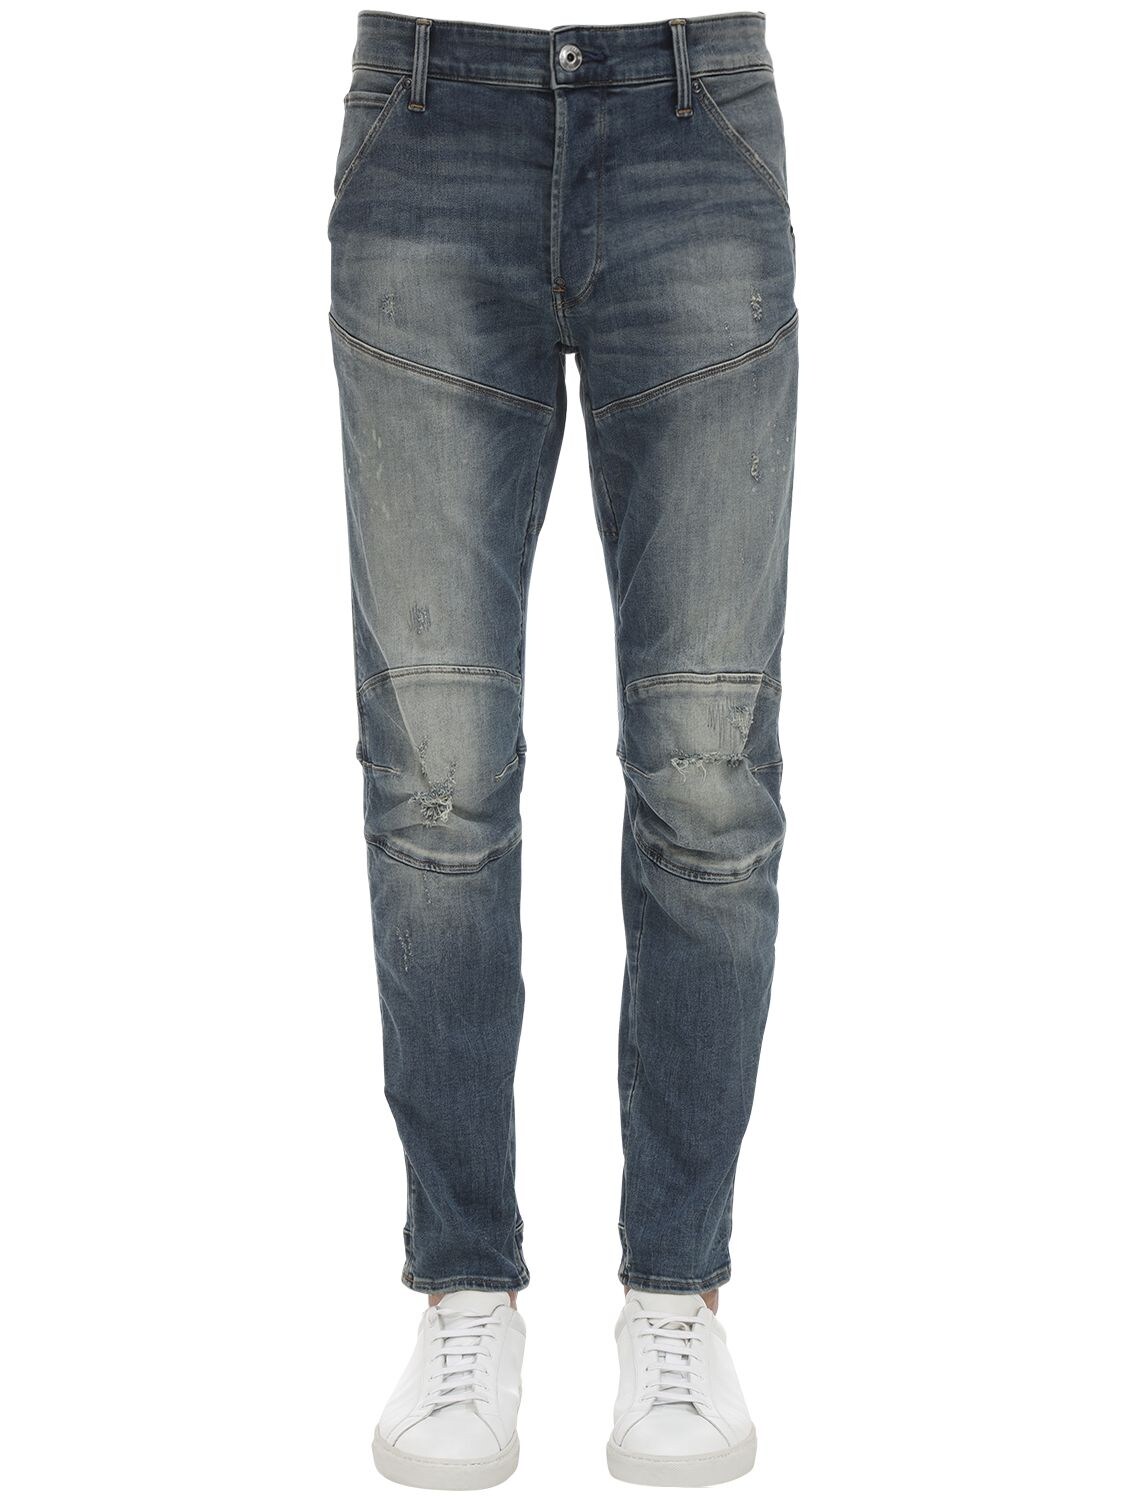 G-star 5620 3d Slim Cotton Denim Jeans